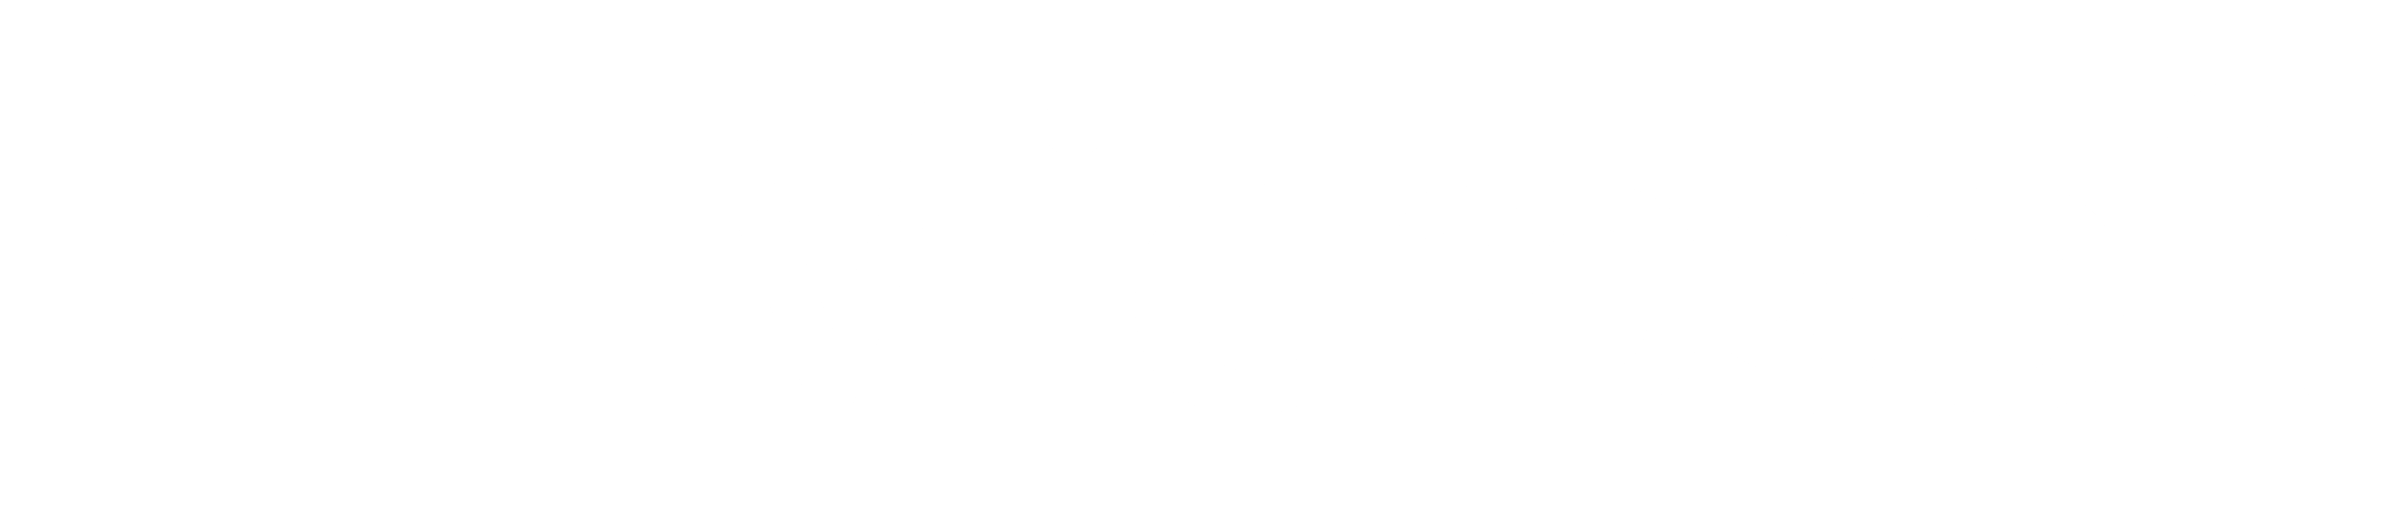 microsoft-logo-black-and-white.png